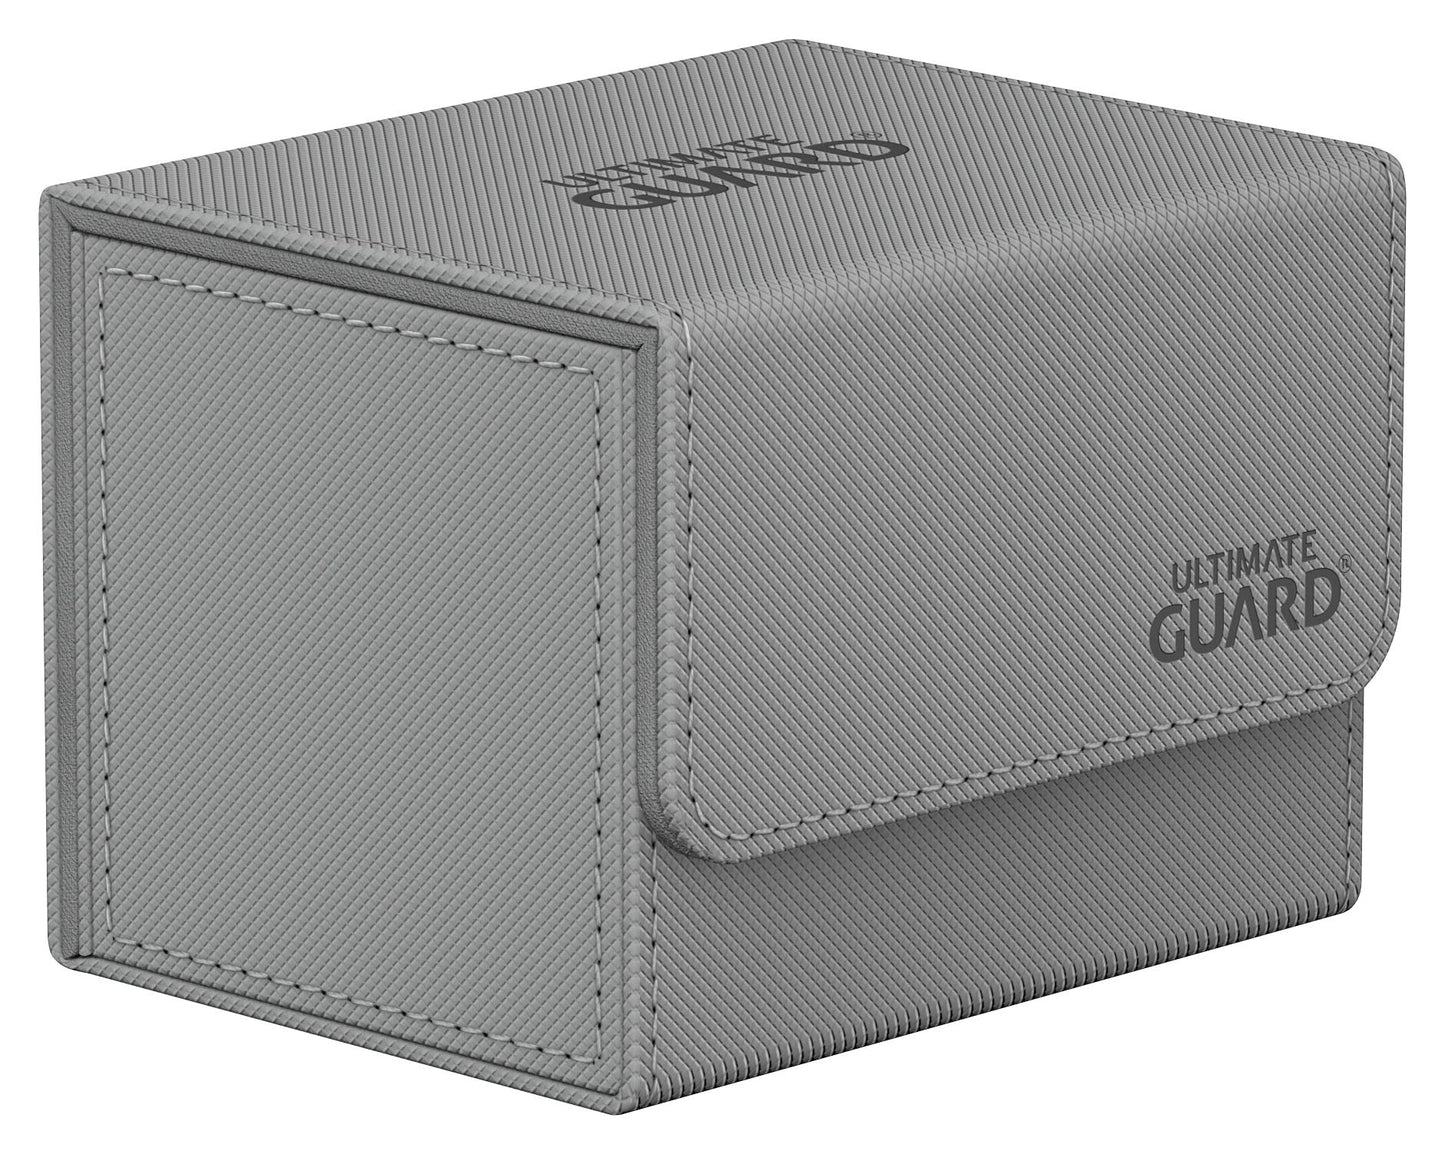 Ultimate Guard - Sidewinder 100+ Deck Box - XenoSkin